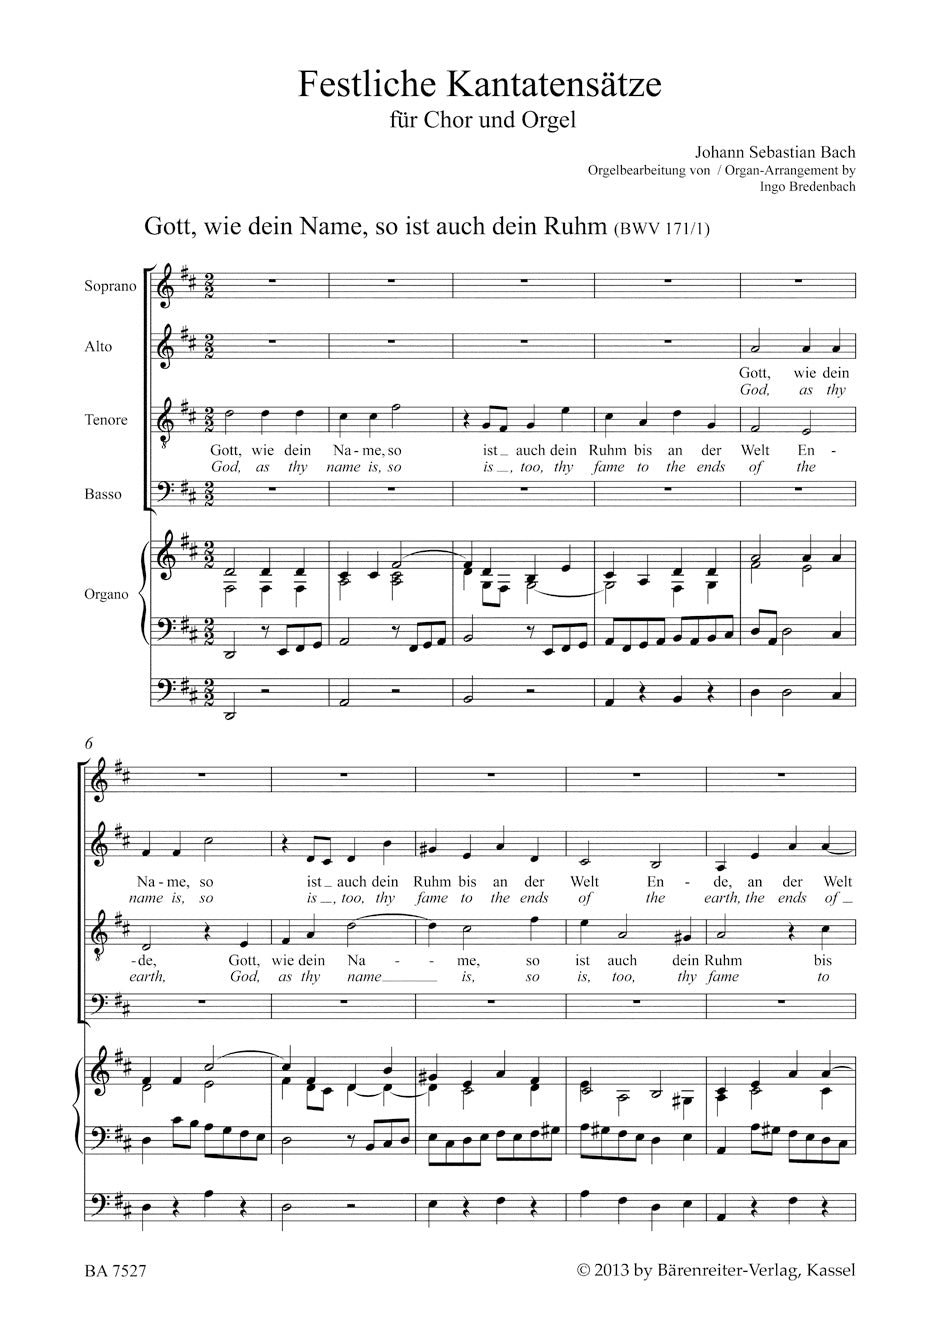 Bach Festive Choral settings from Cantatas (Arranged for Choir and Organ)